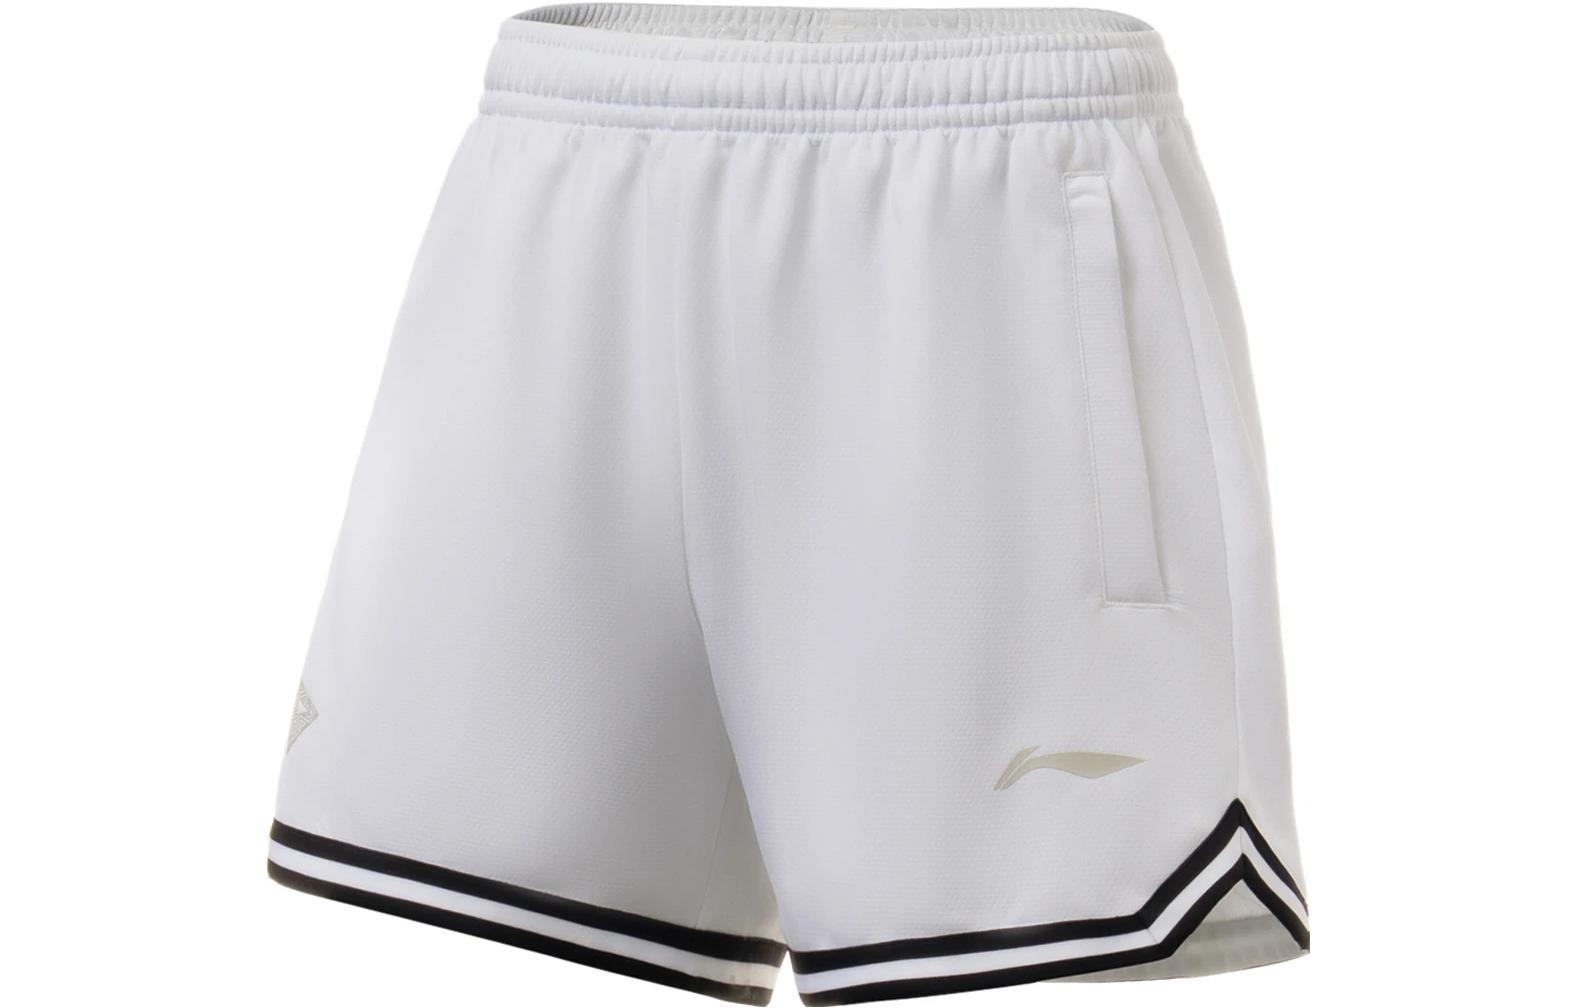 Мужские баскетбольные шорты Li Ning, цвет standard white